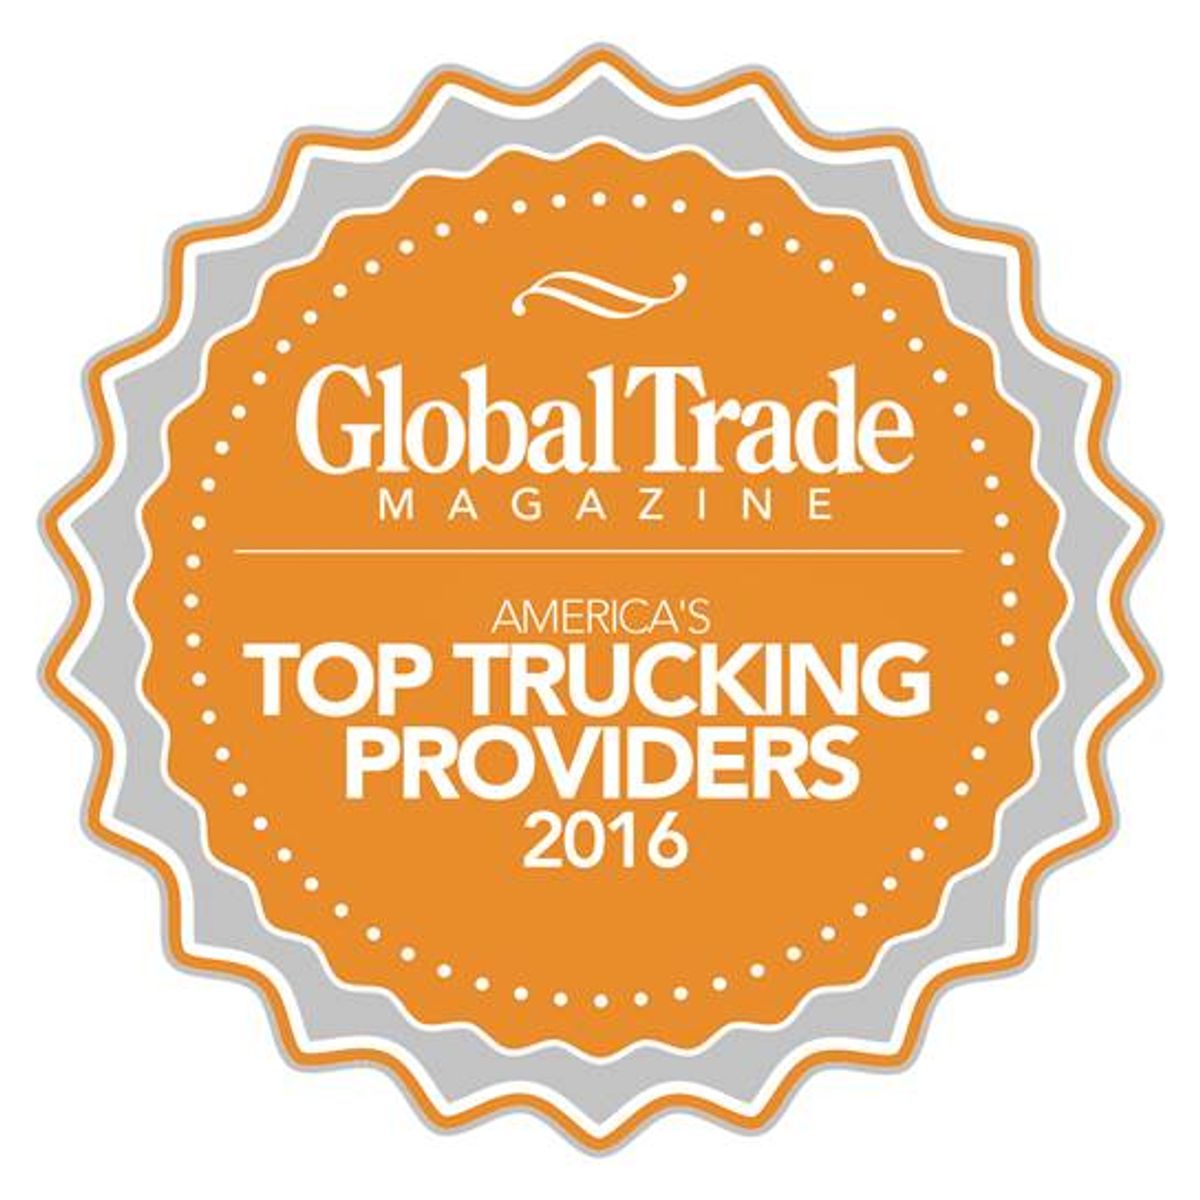 Penske Logistics is Global Trade Magazine Top Trucking Provider